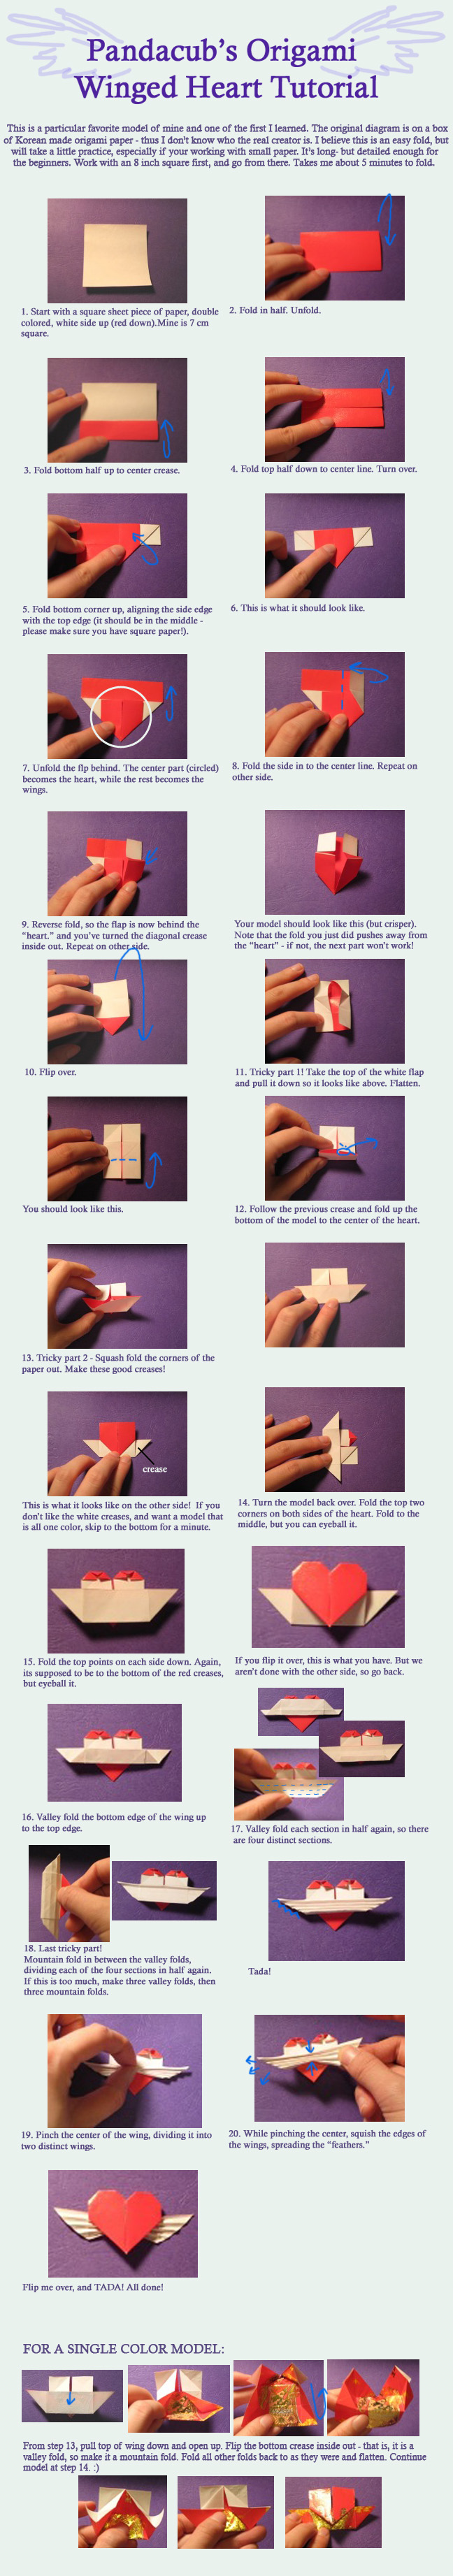 [Image: Origami_Winged_Heart_Tutorial_by_pandacub143.jpg]